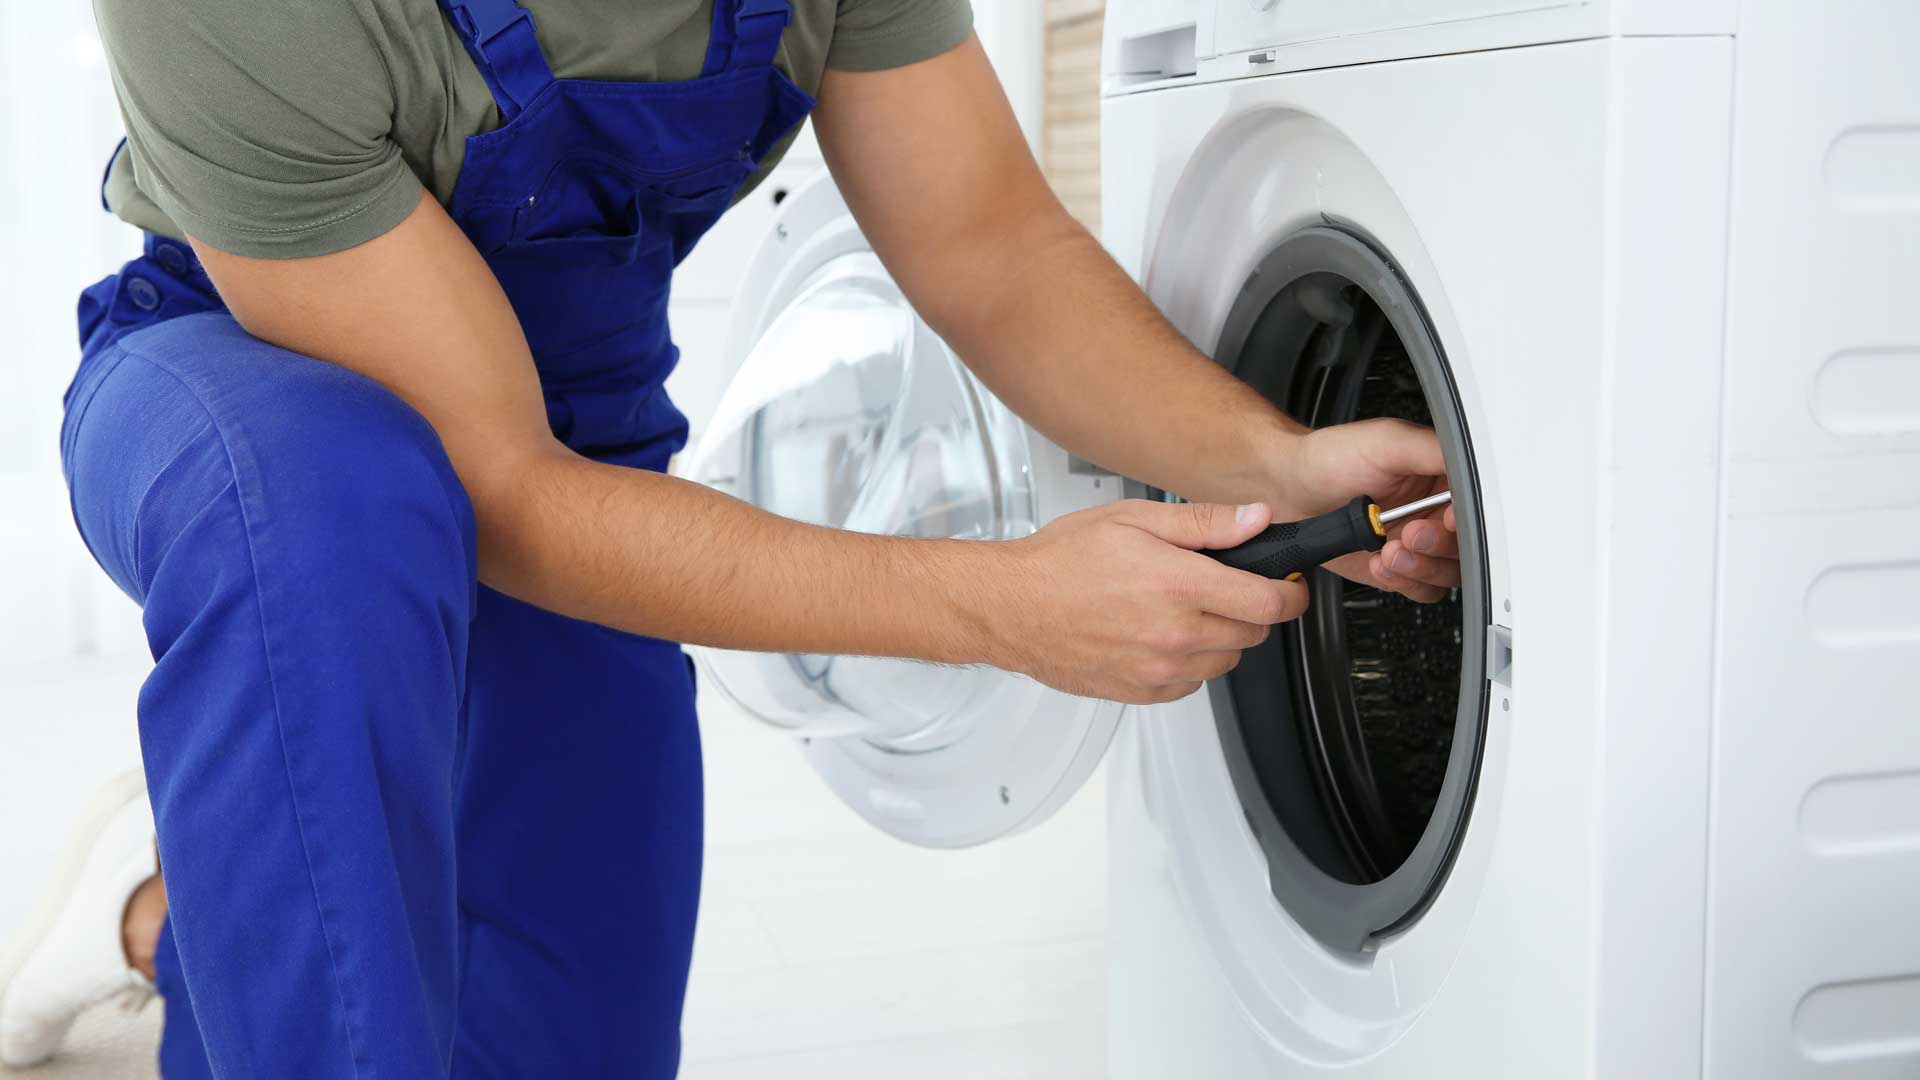 A man repairing a clothes washer